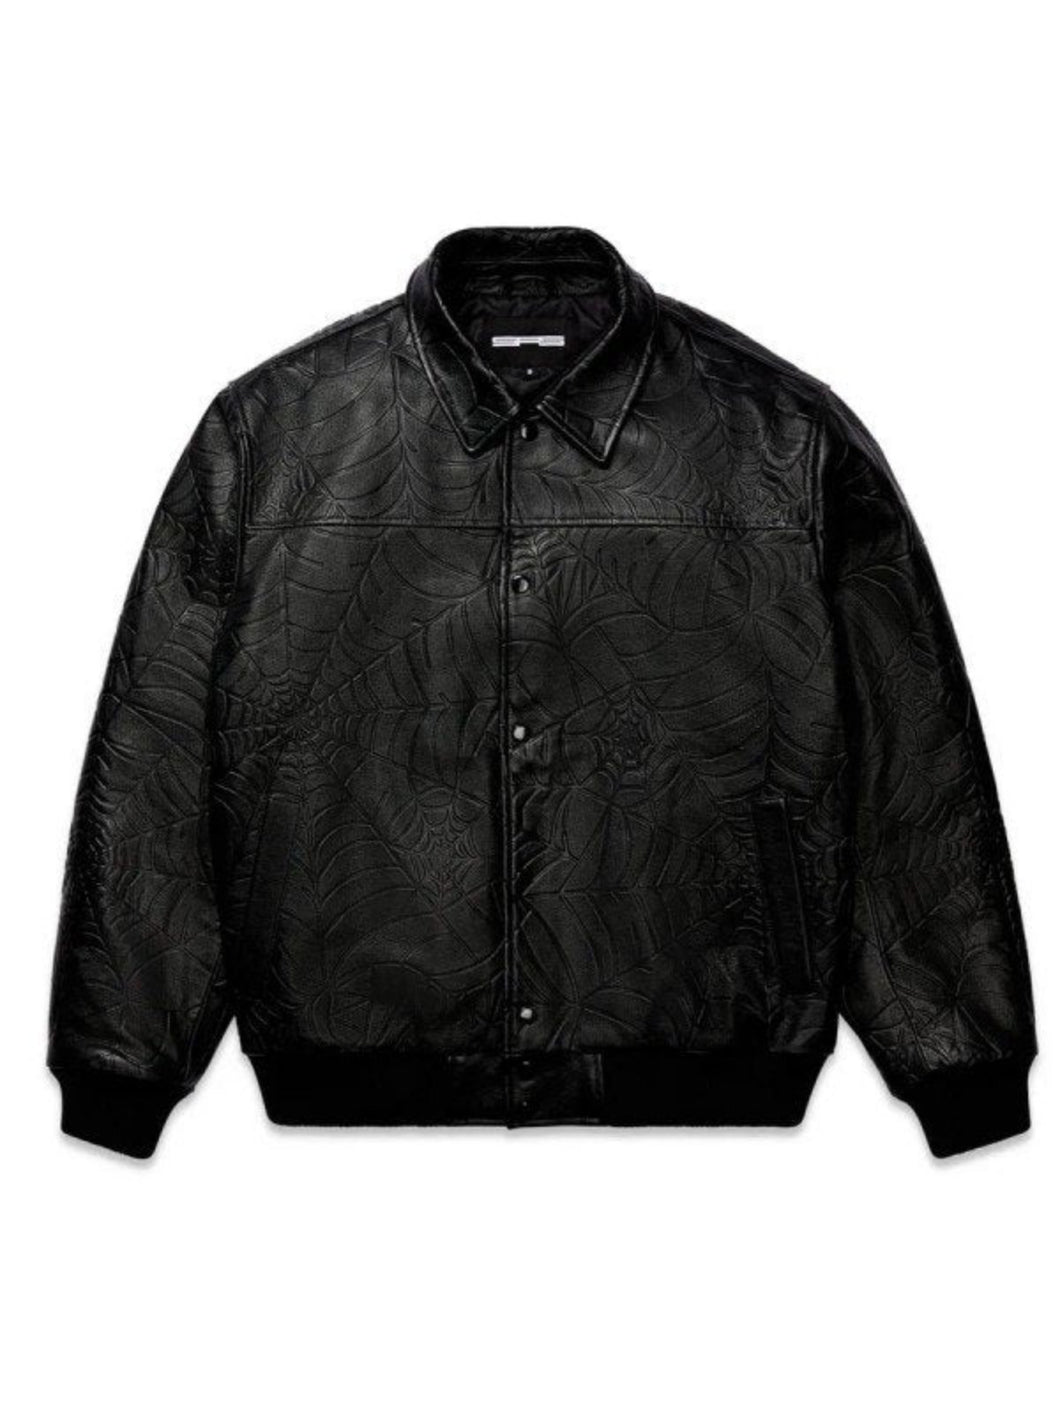 Sp5der Black Debossed Web Jacket